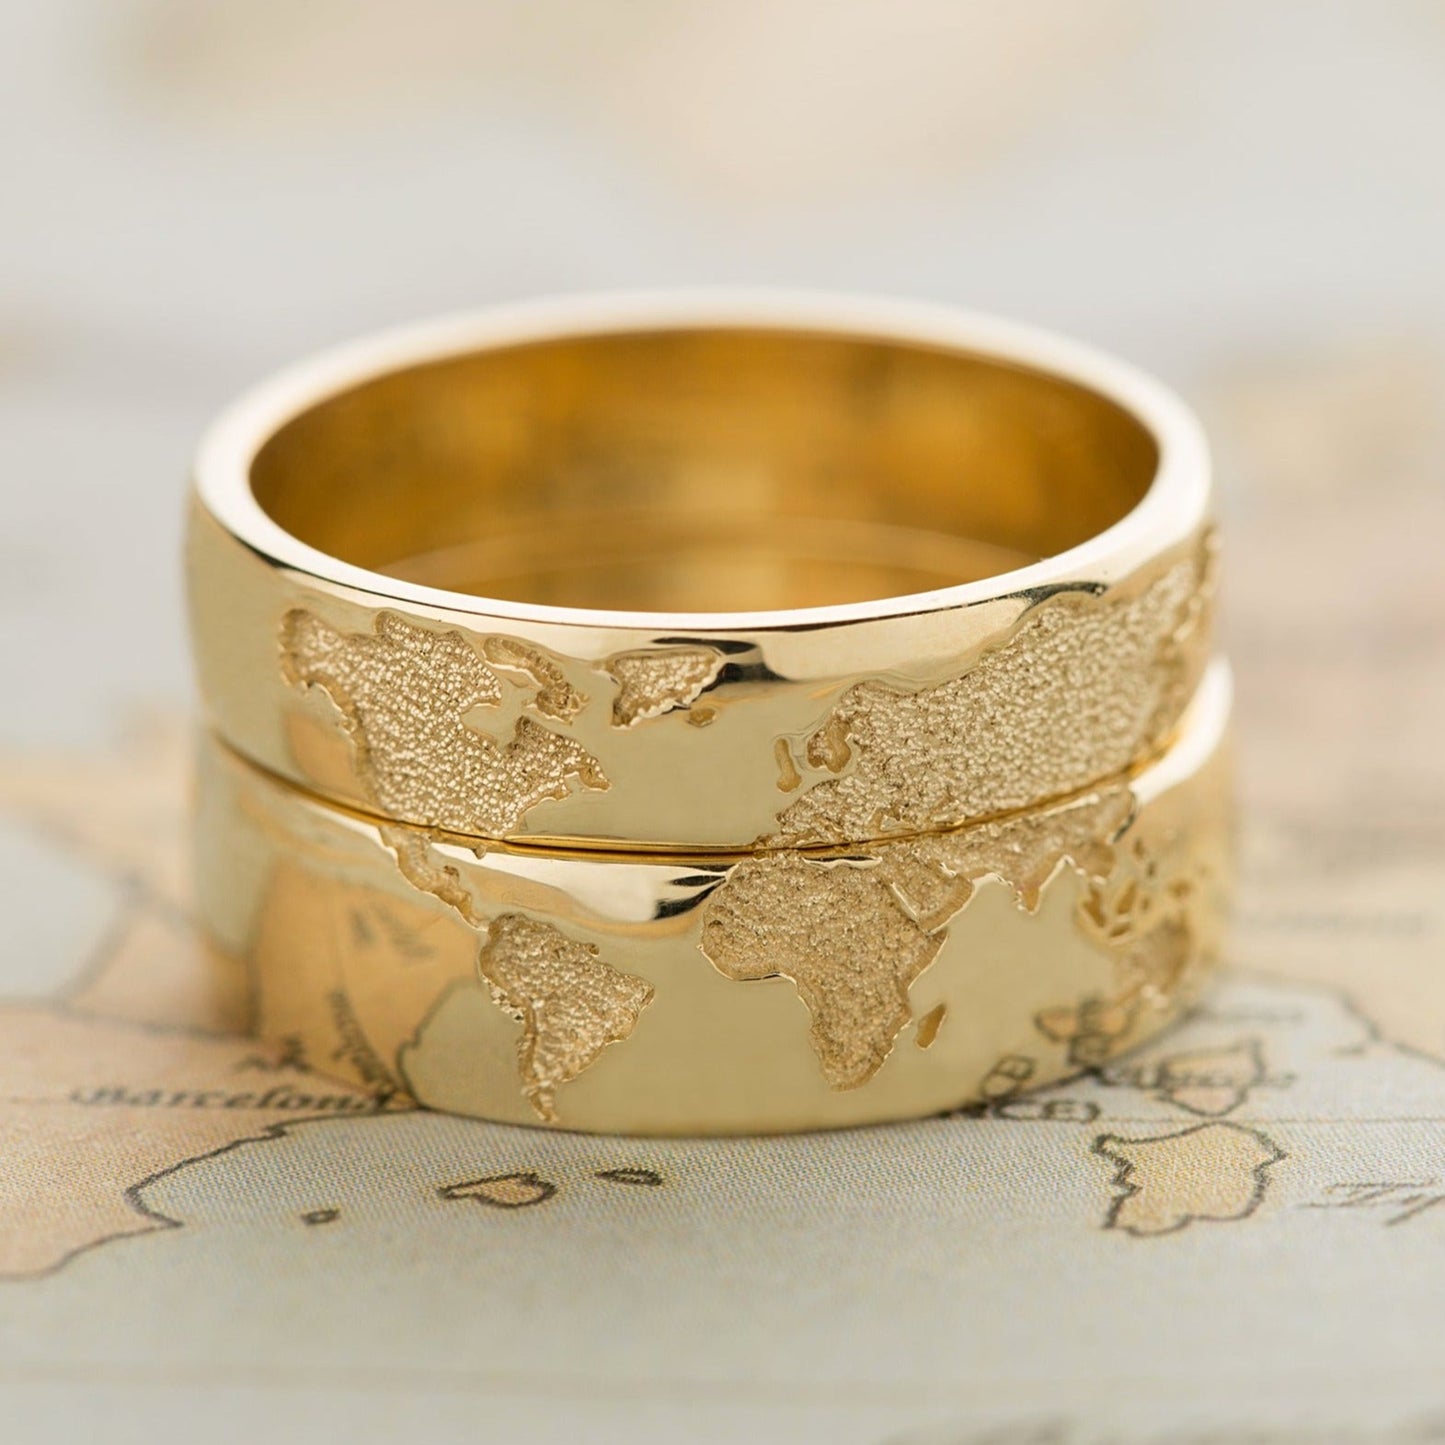 world map wedding bands, gold wedding rings, wedding rings set, matching wedding bands, unique wedding bands,couple wedding rings